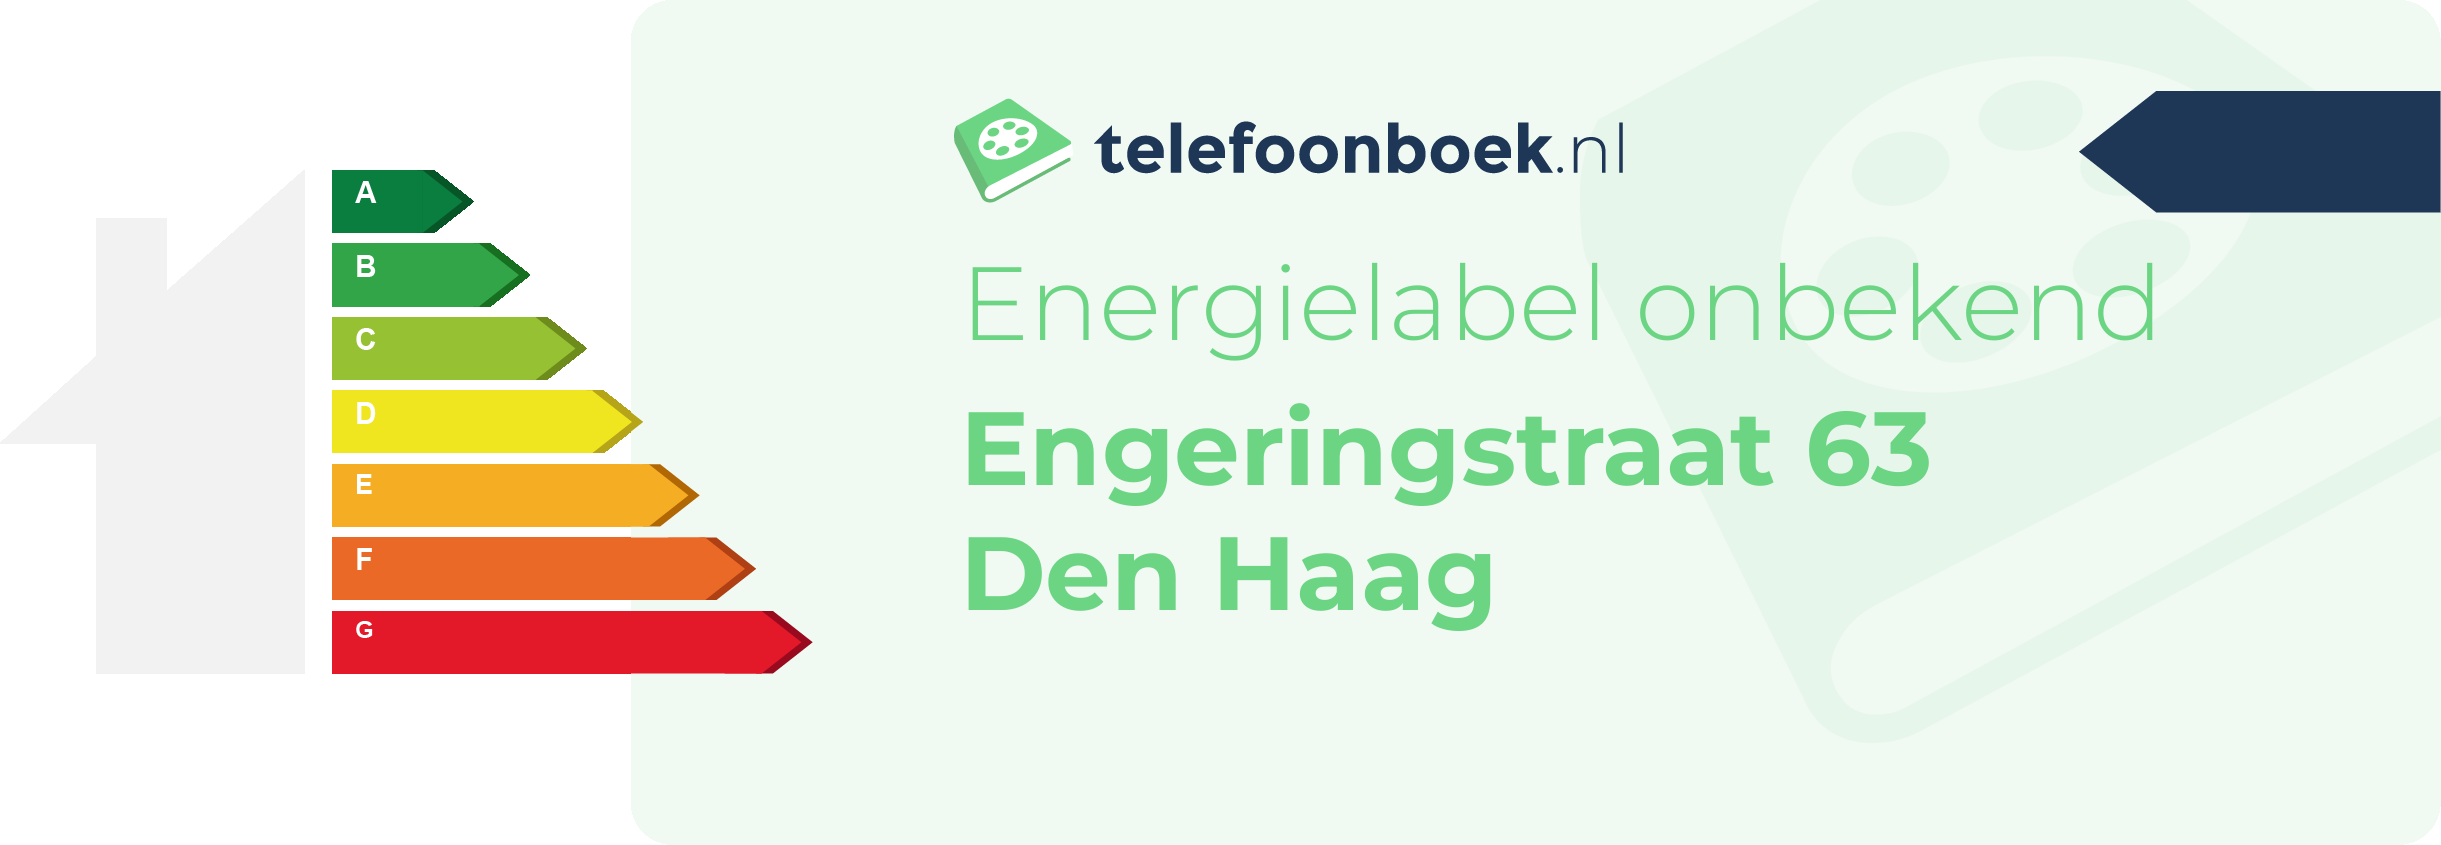 Energielabel Engeringstraat 63 Den Haag